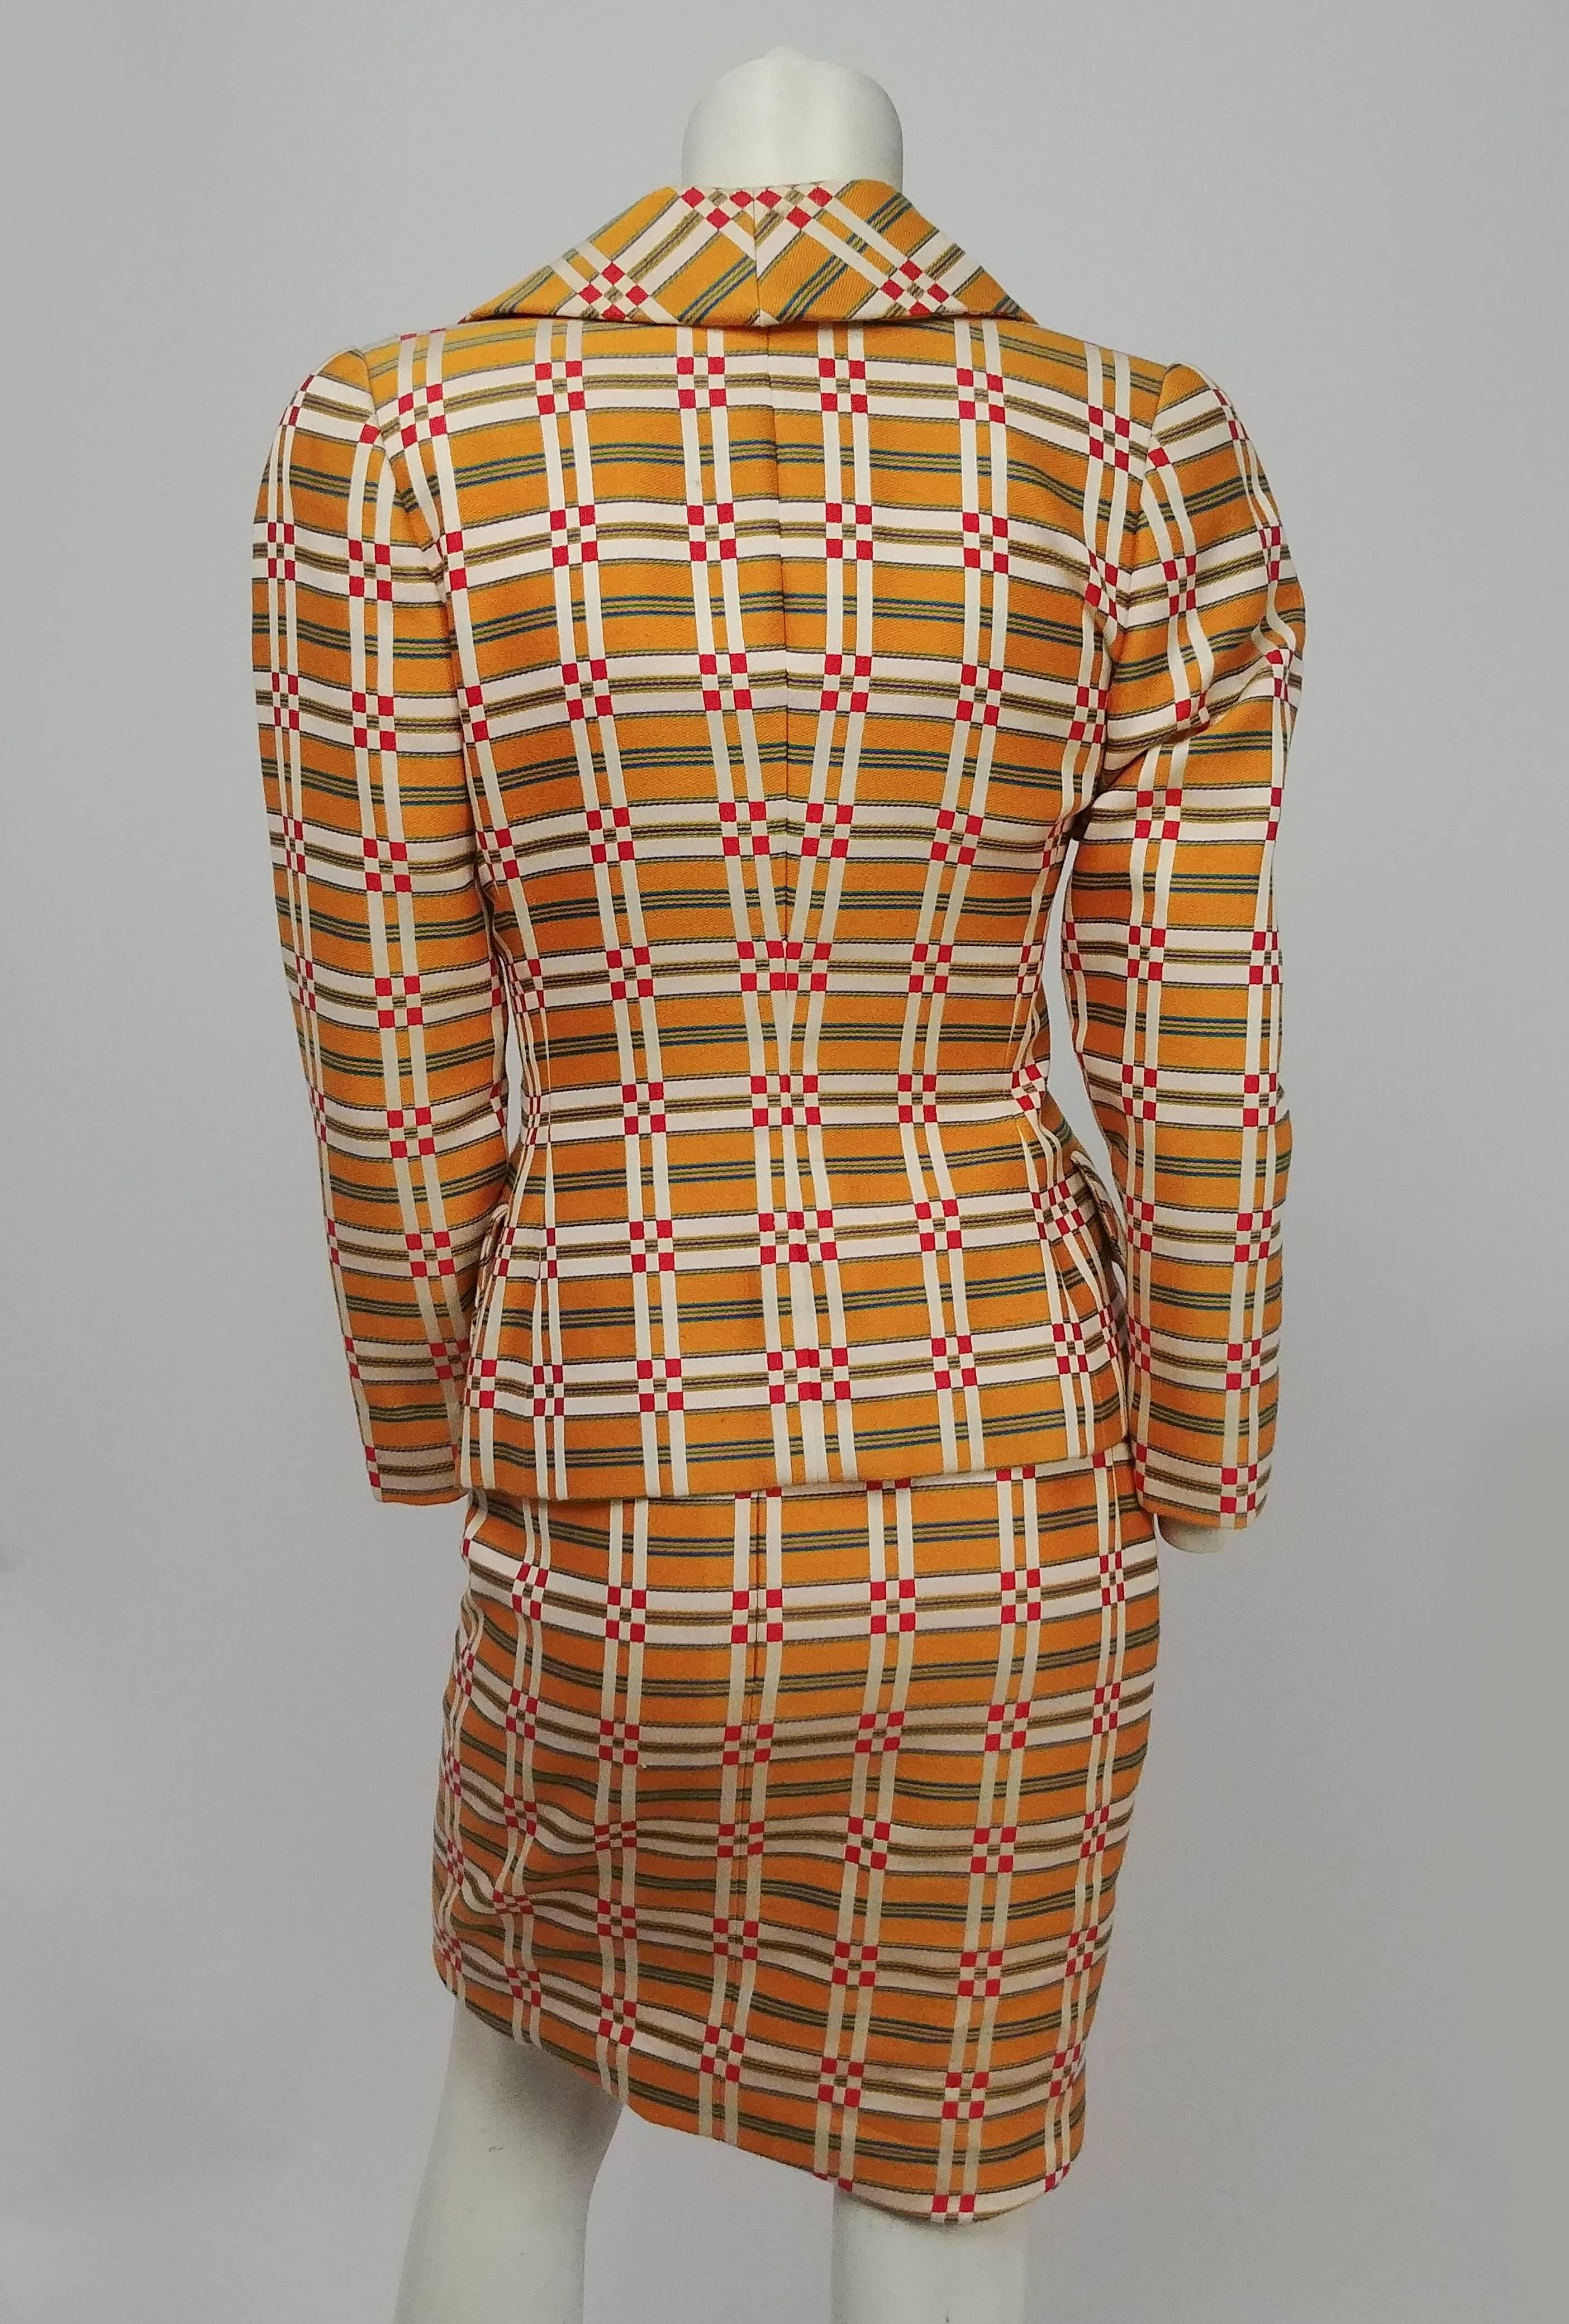 Women's Bill Blass Orange Plaid Skirt Suit with Wax Seal Buttons, 1980s 